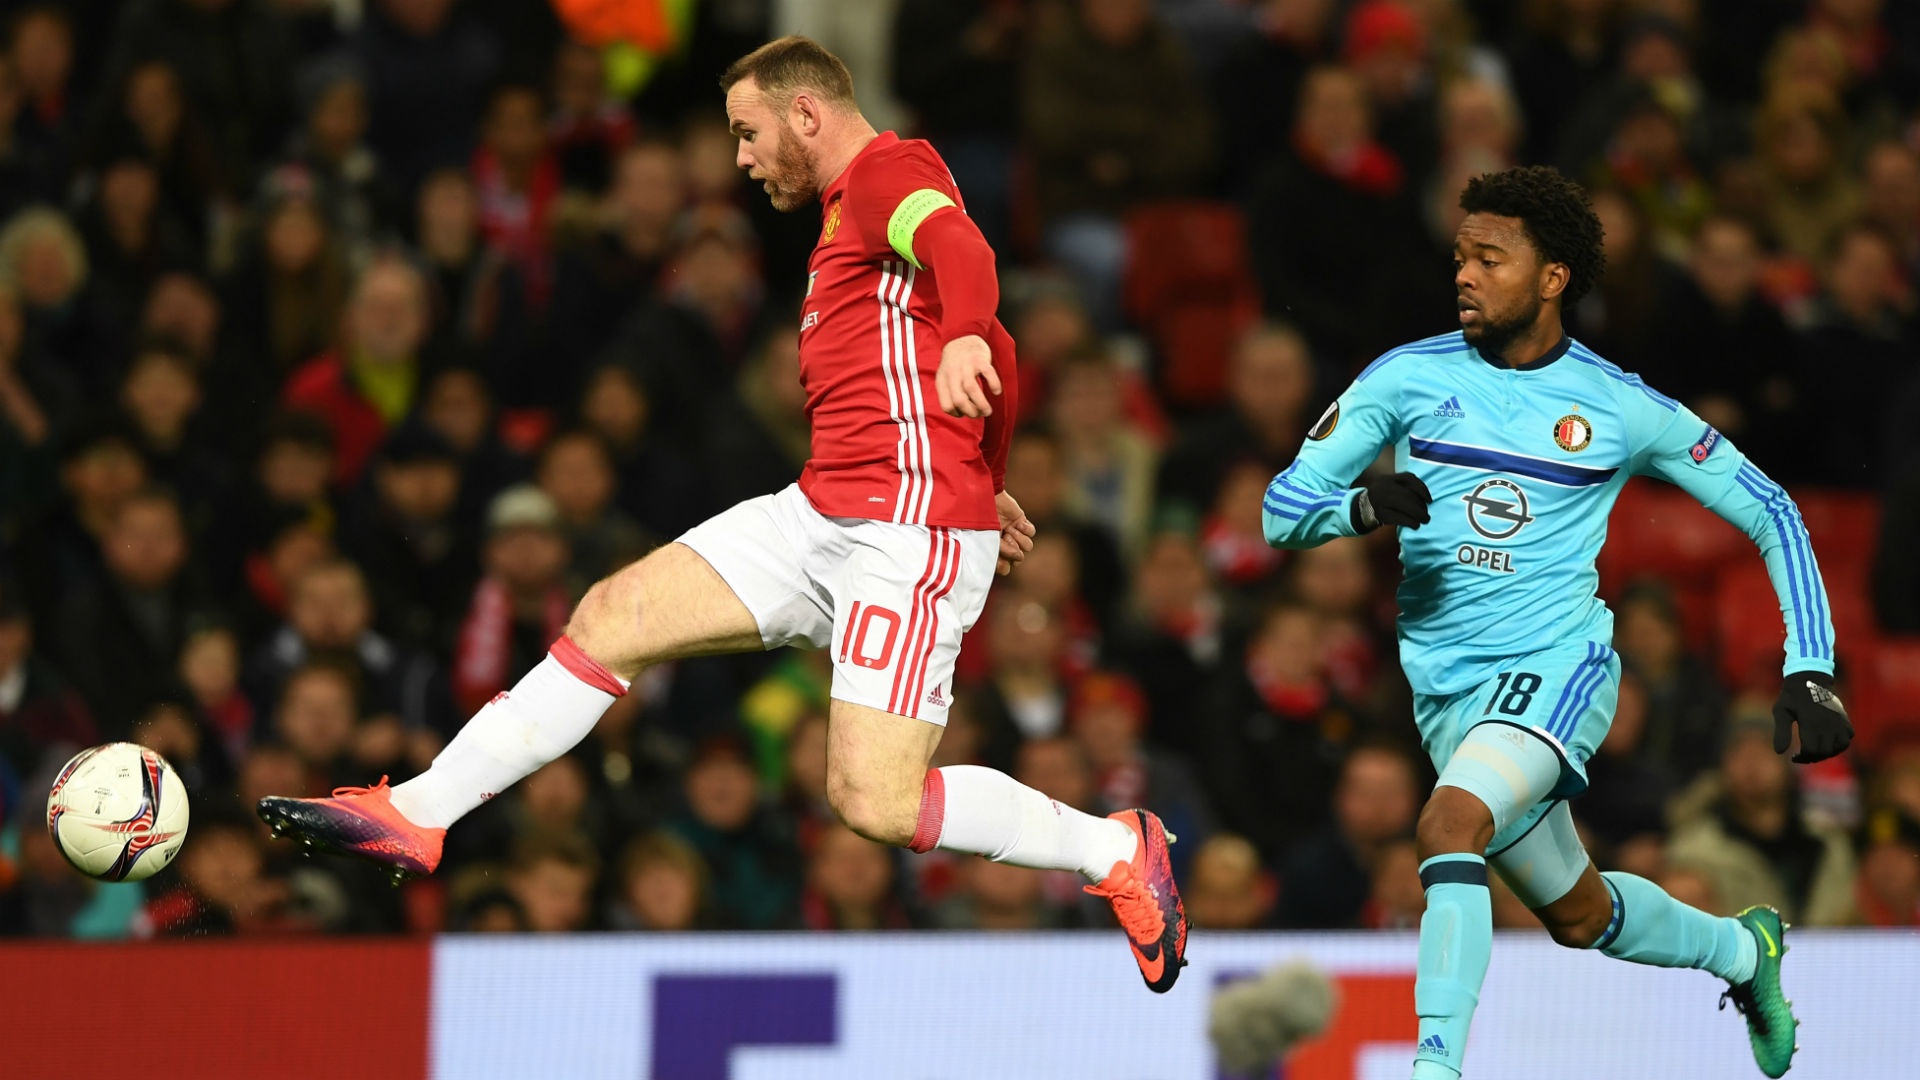 Wayne Rooney kicking the ball during an Europa League match. Goal